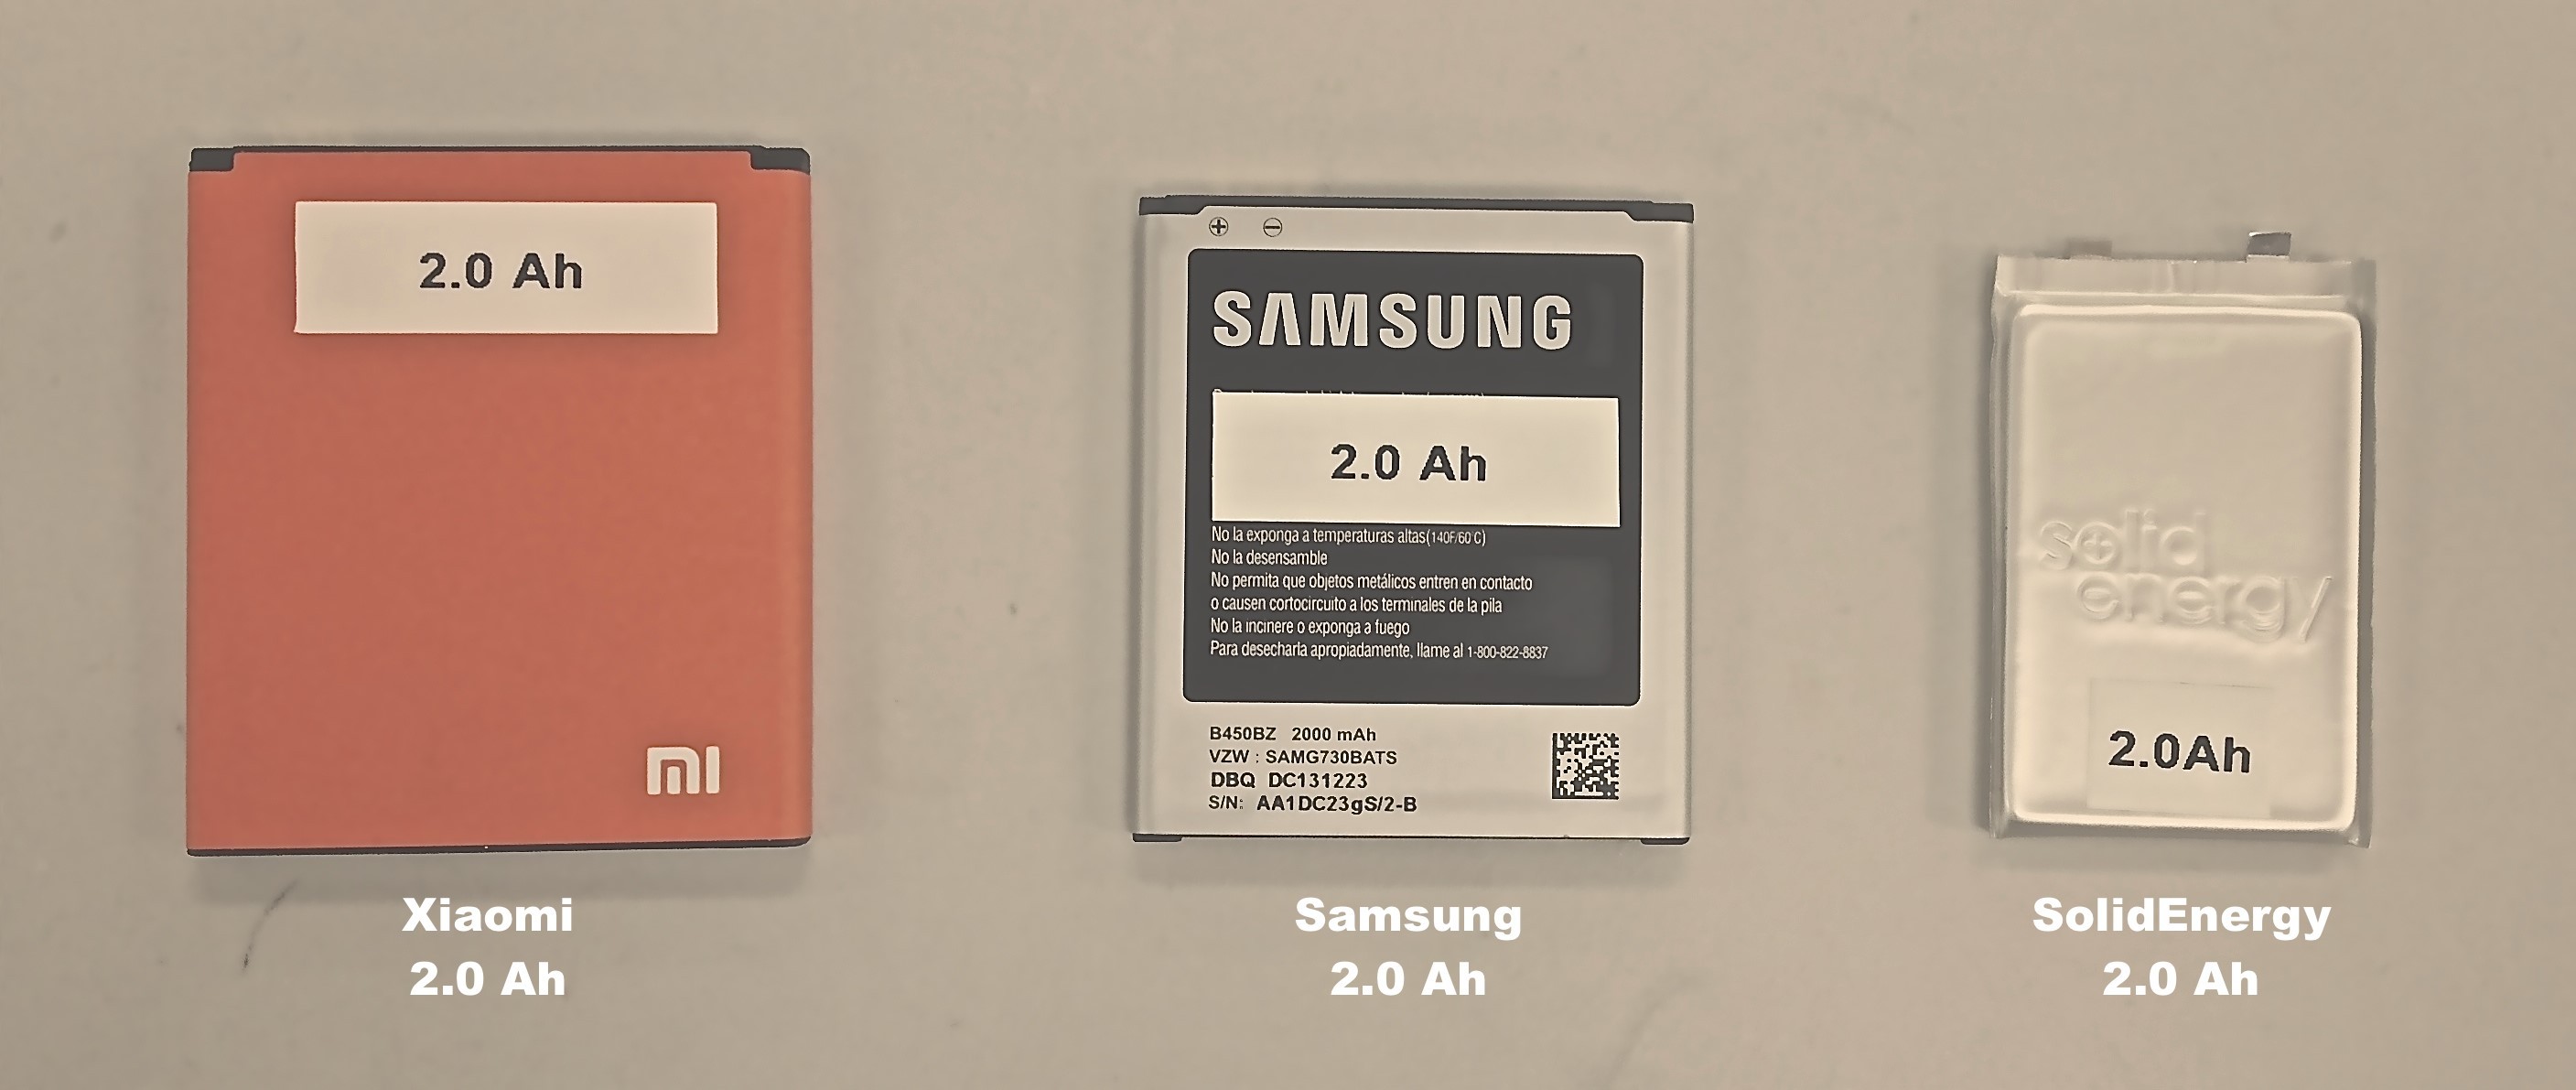 SolidEnergy_vs._Xiaomi,_Samsung